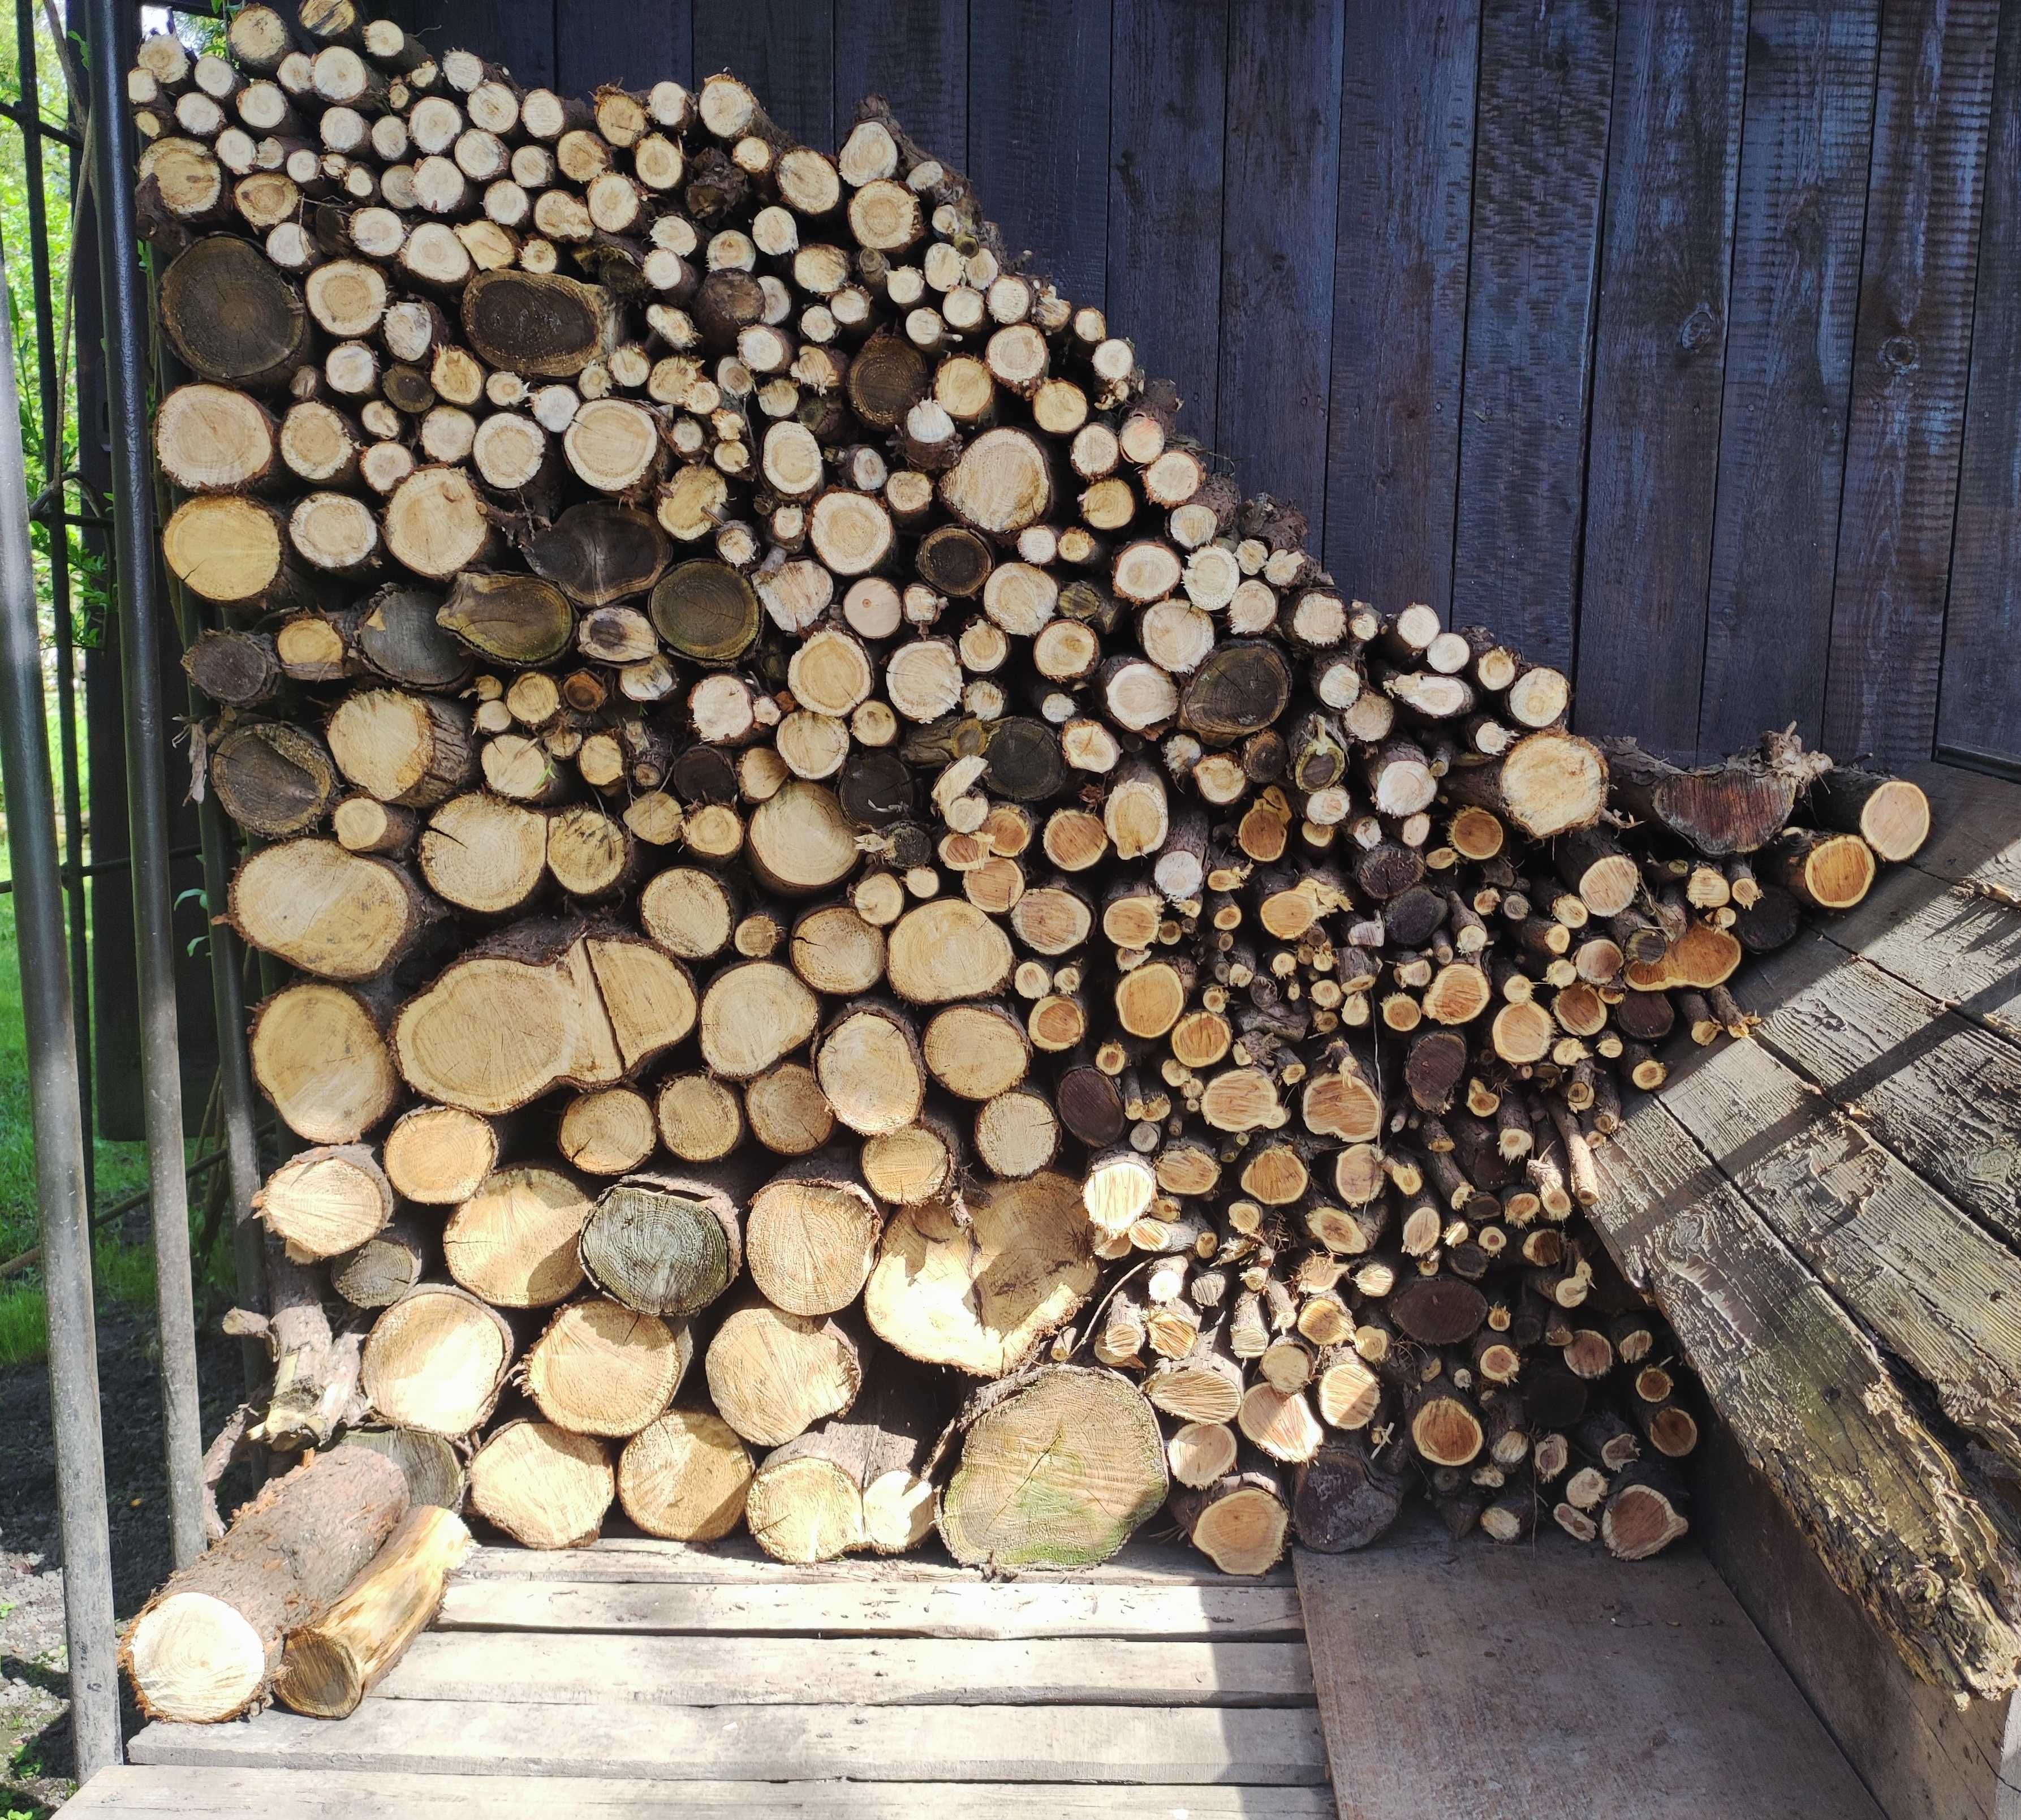 Drewno, rozpałka, suche, pocięte - tuja i cis ok. 1,5 m3